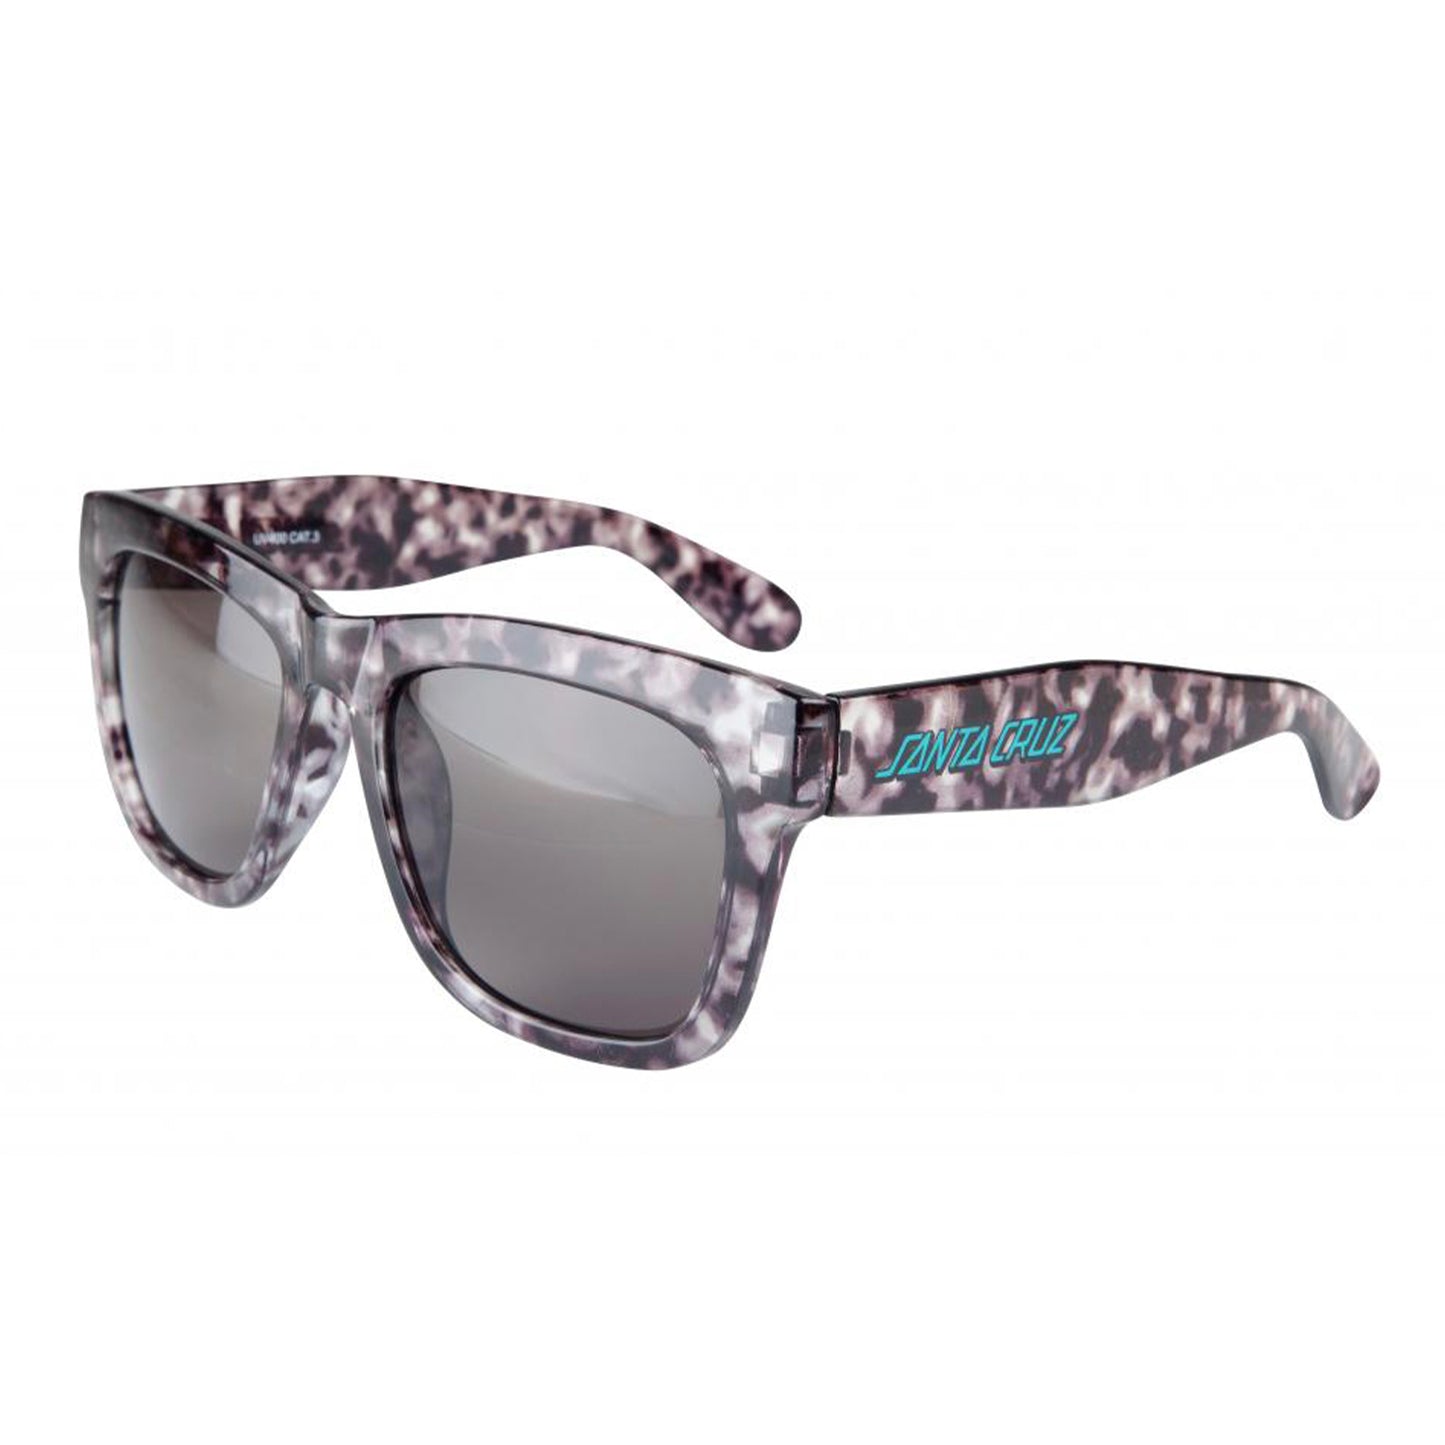 Santa Cruz Strip II Womens Sunglasses - Grey Tortoiseshell - Prime Delux Store